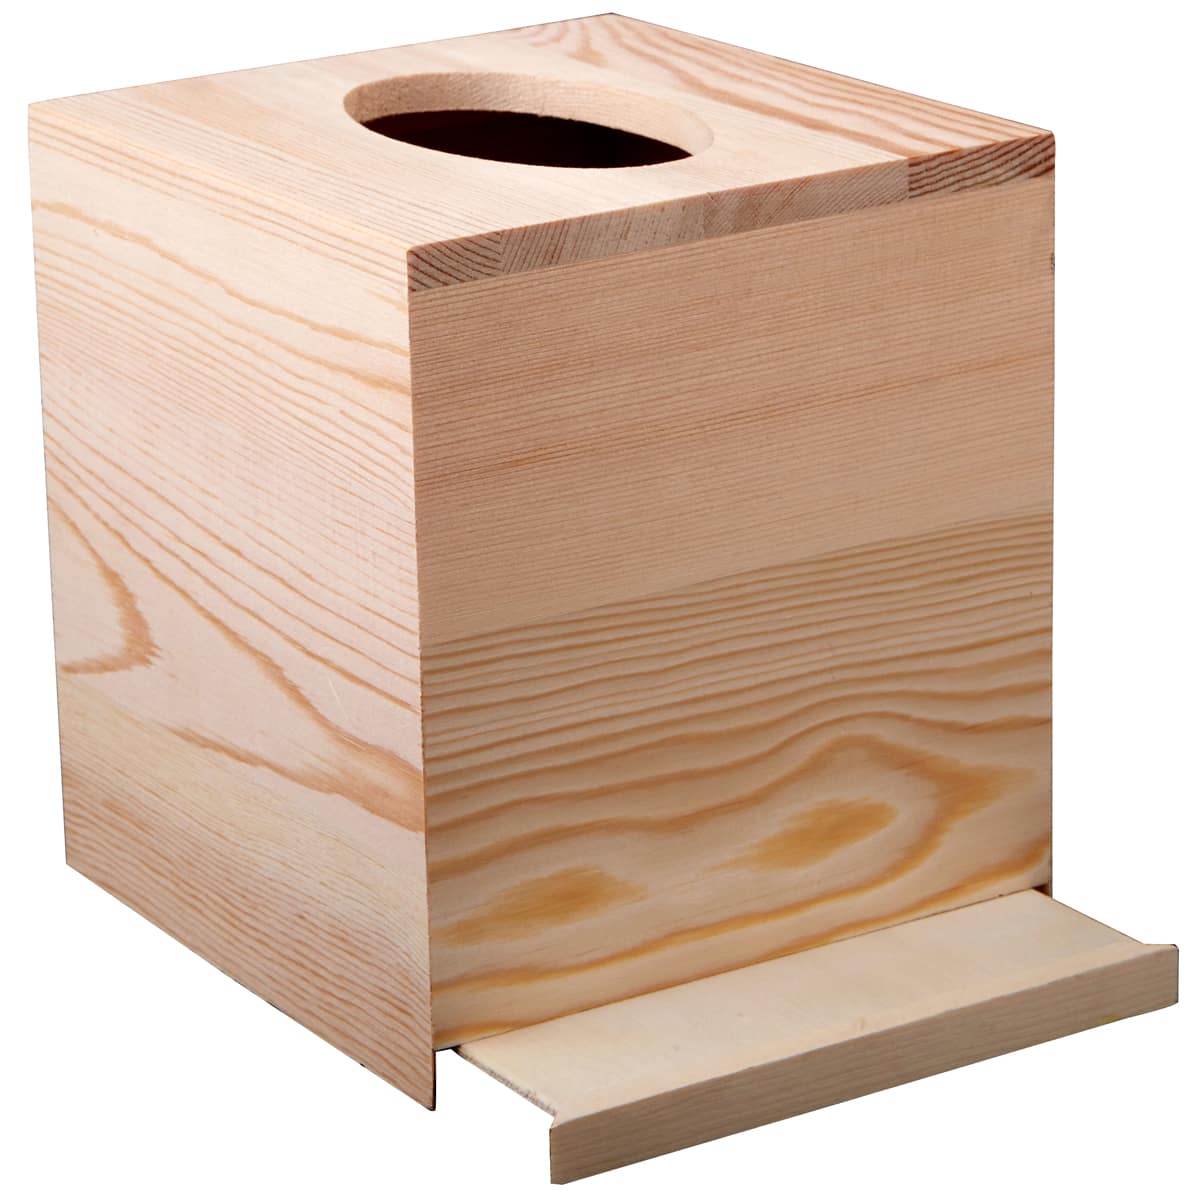 4x Solid Wooden Plain Box Transparent Top W/ Compartments Decoupage Arts/Crafts 